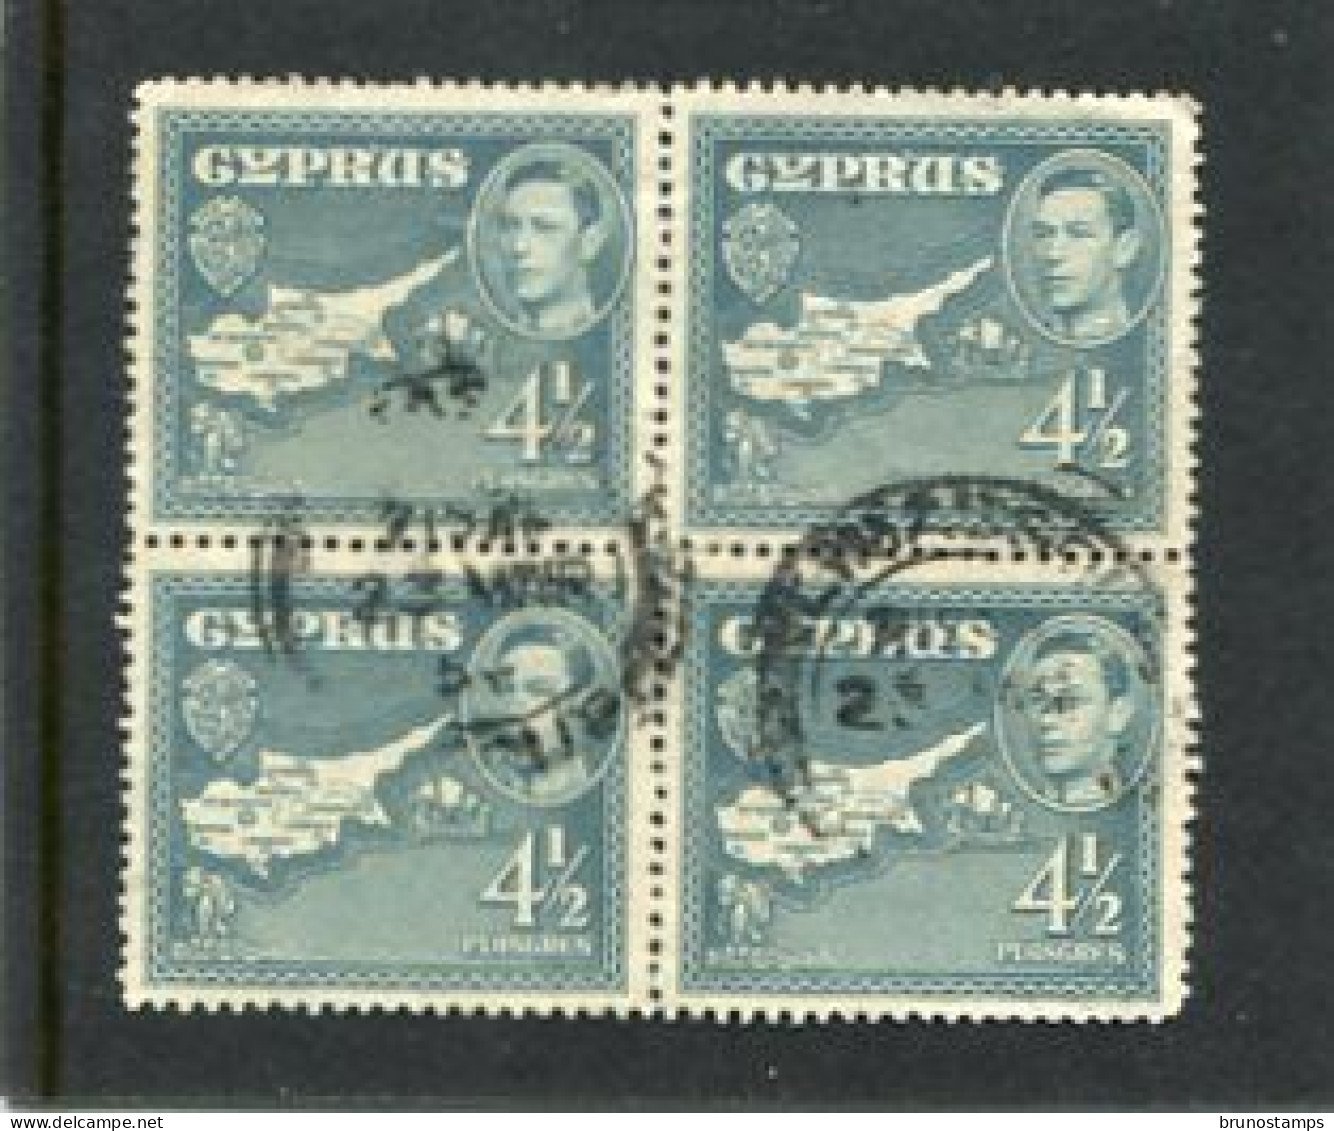 CYPRUS - 1938  GEORGE VI  4 1/2 Pi  BLOCK OF 4 FINE USED - Zypern (...-1960)